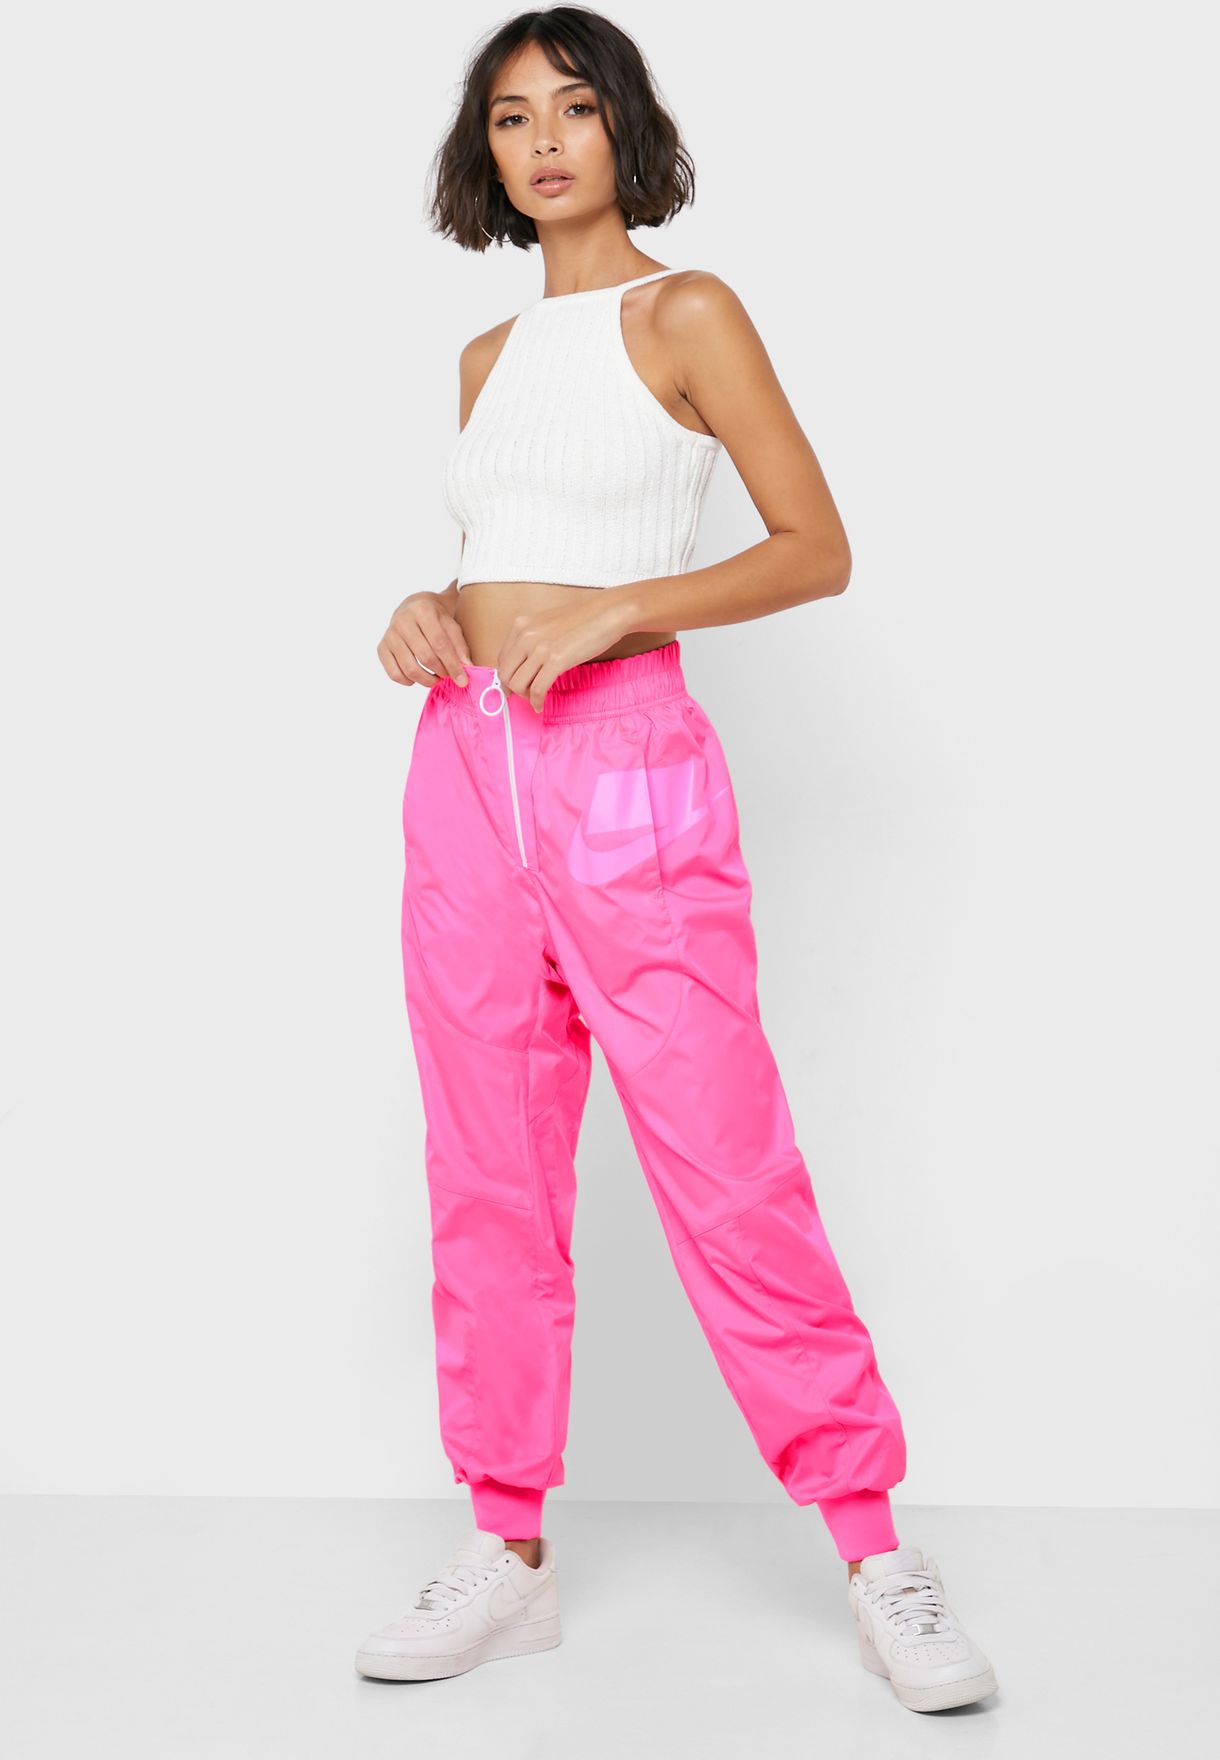 womens pink jogging suit